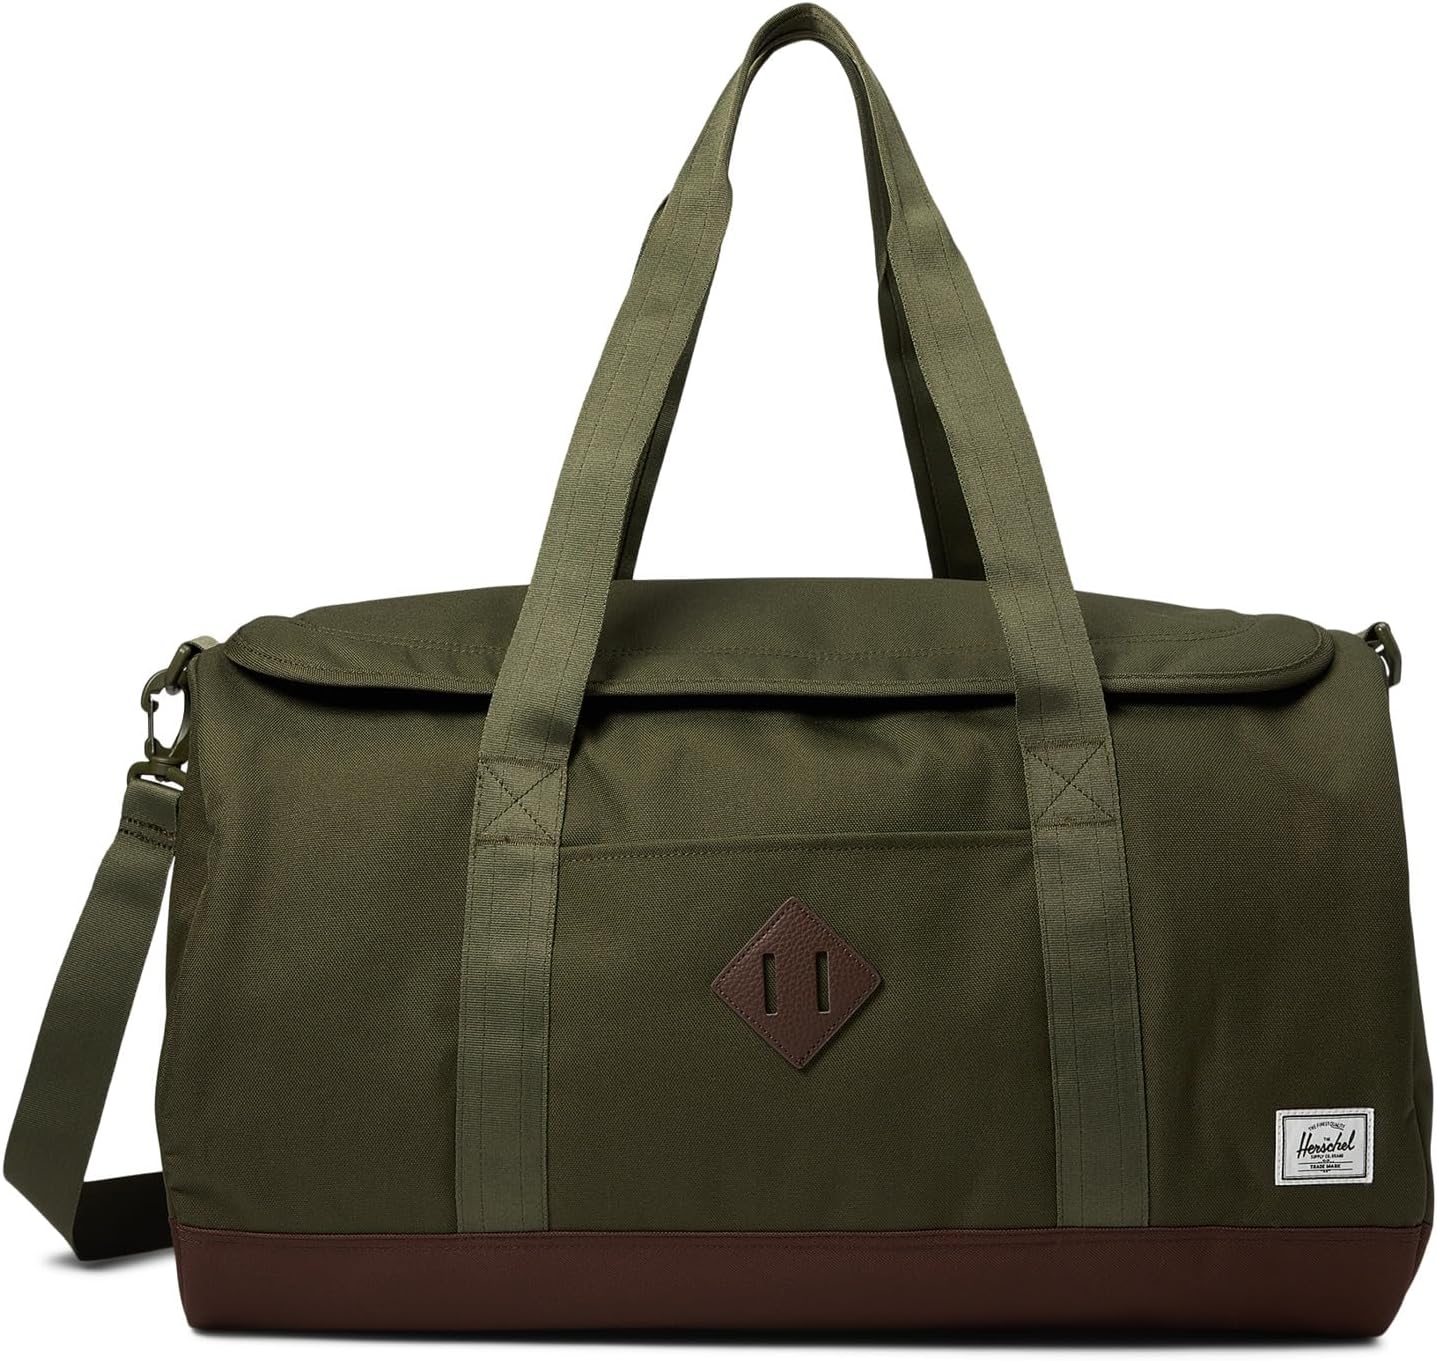 рюкзак pop quiz backpack herschel supply co цвет light taupe chicory coffee Спортивная сумка Heritage Herschel Supply Co., цвет Ivy Green/Chicory Coffee